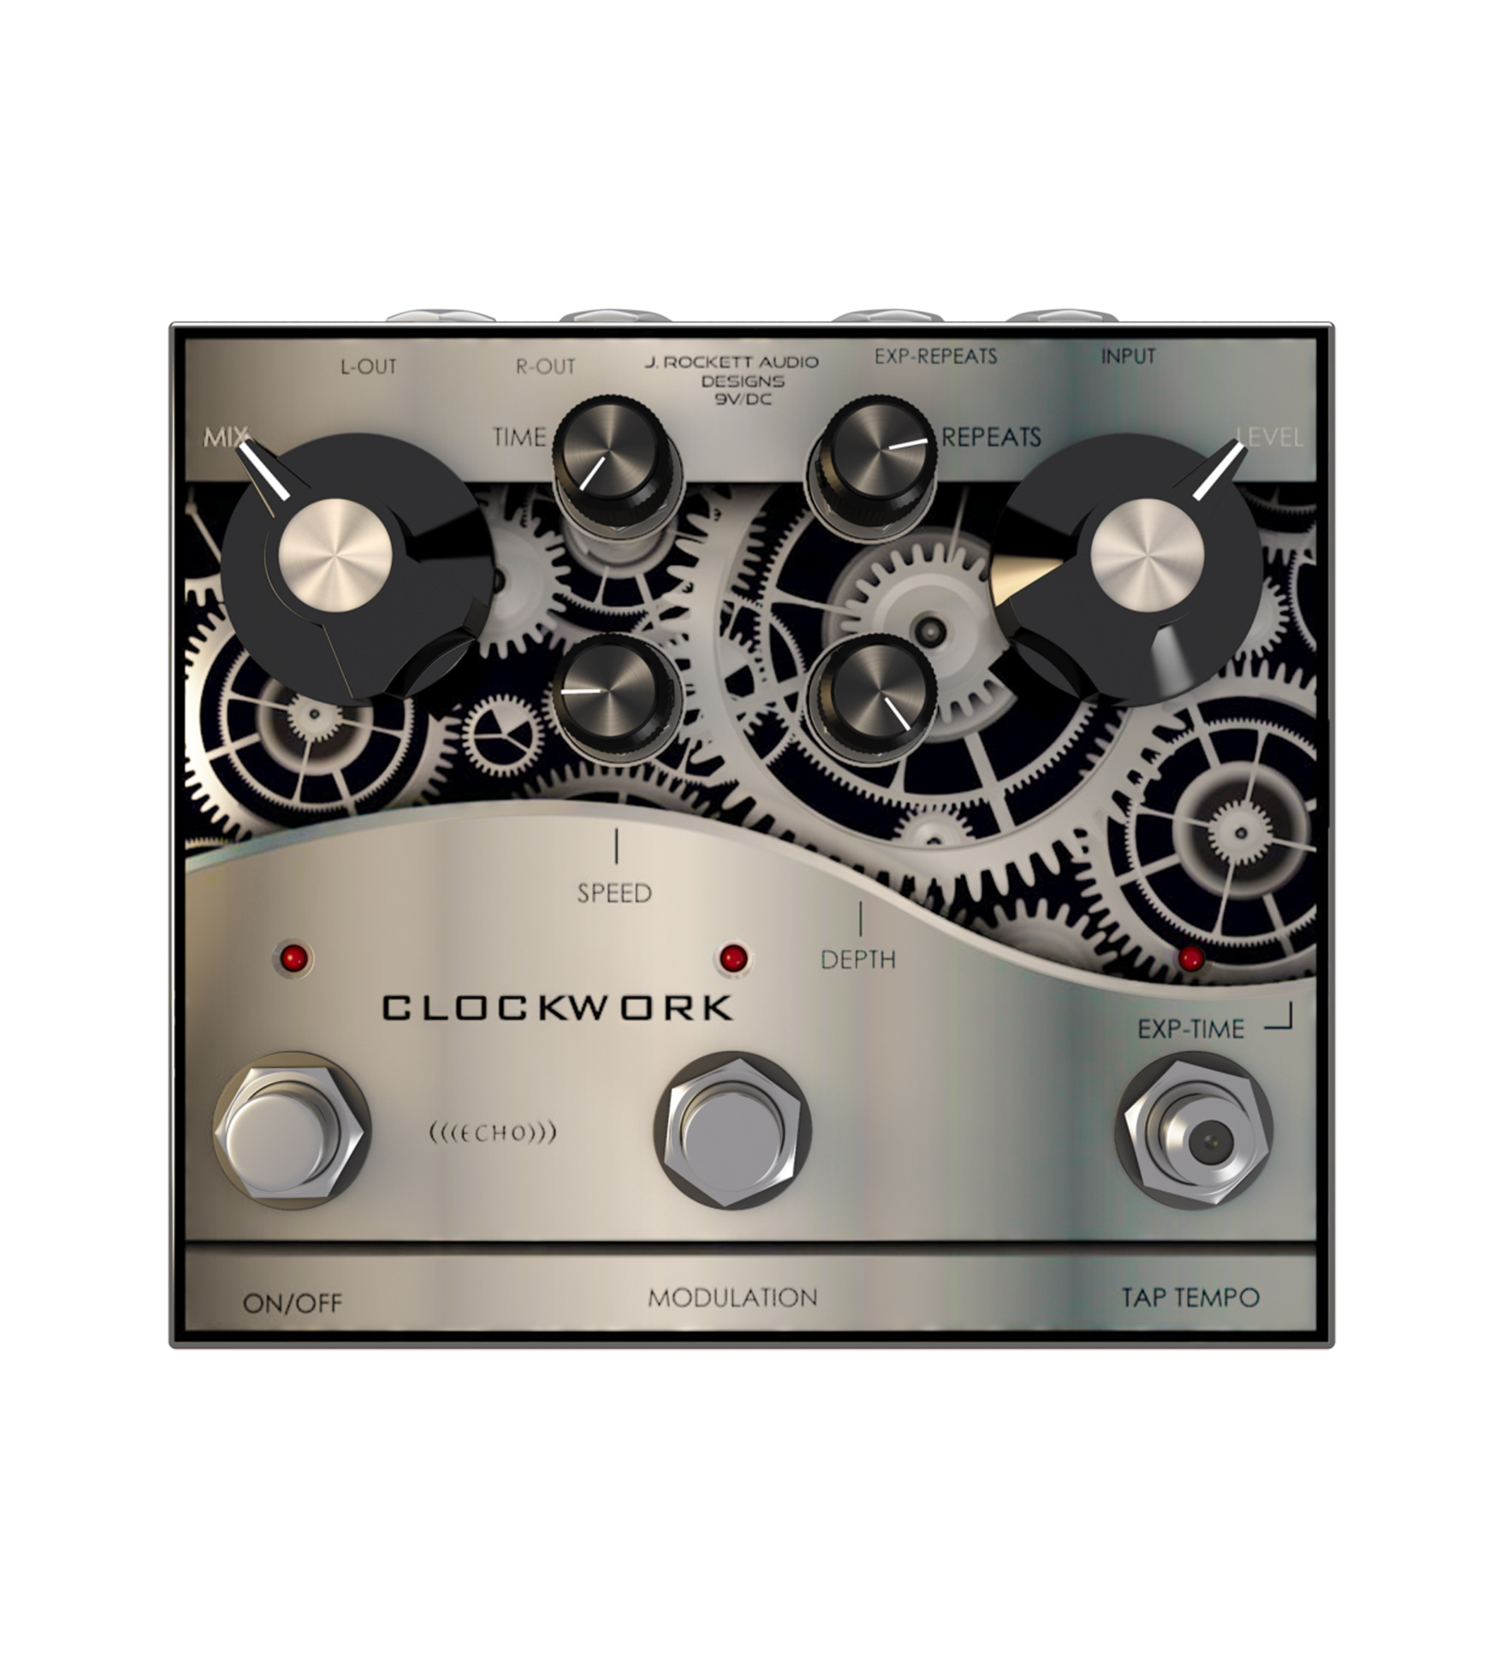 Clockwork Echo (B Stock) - J. Rockett Audio Designs